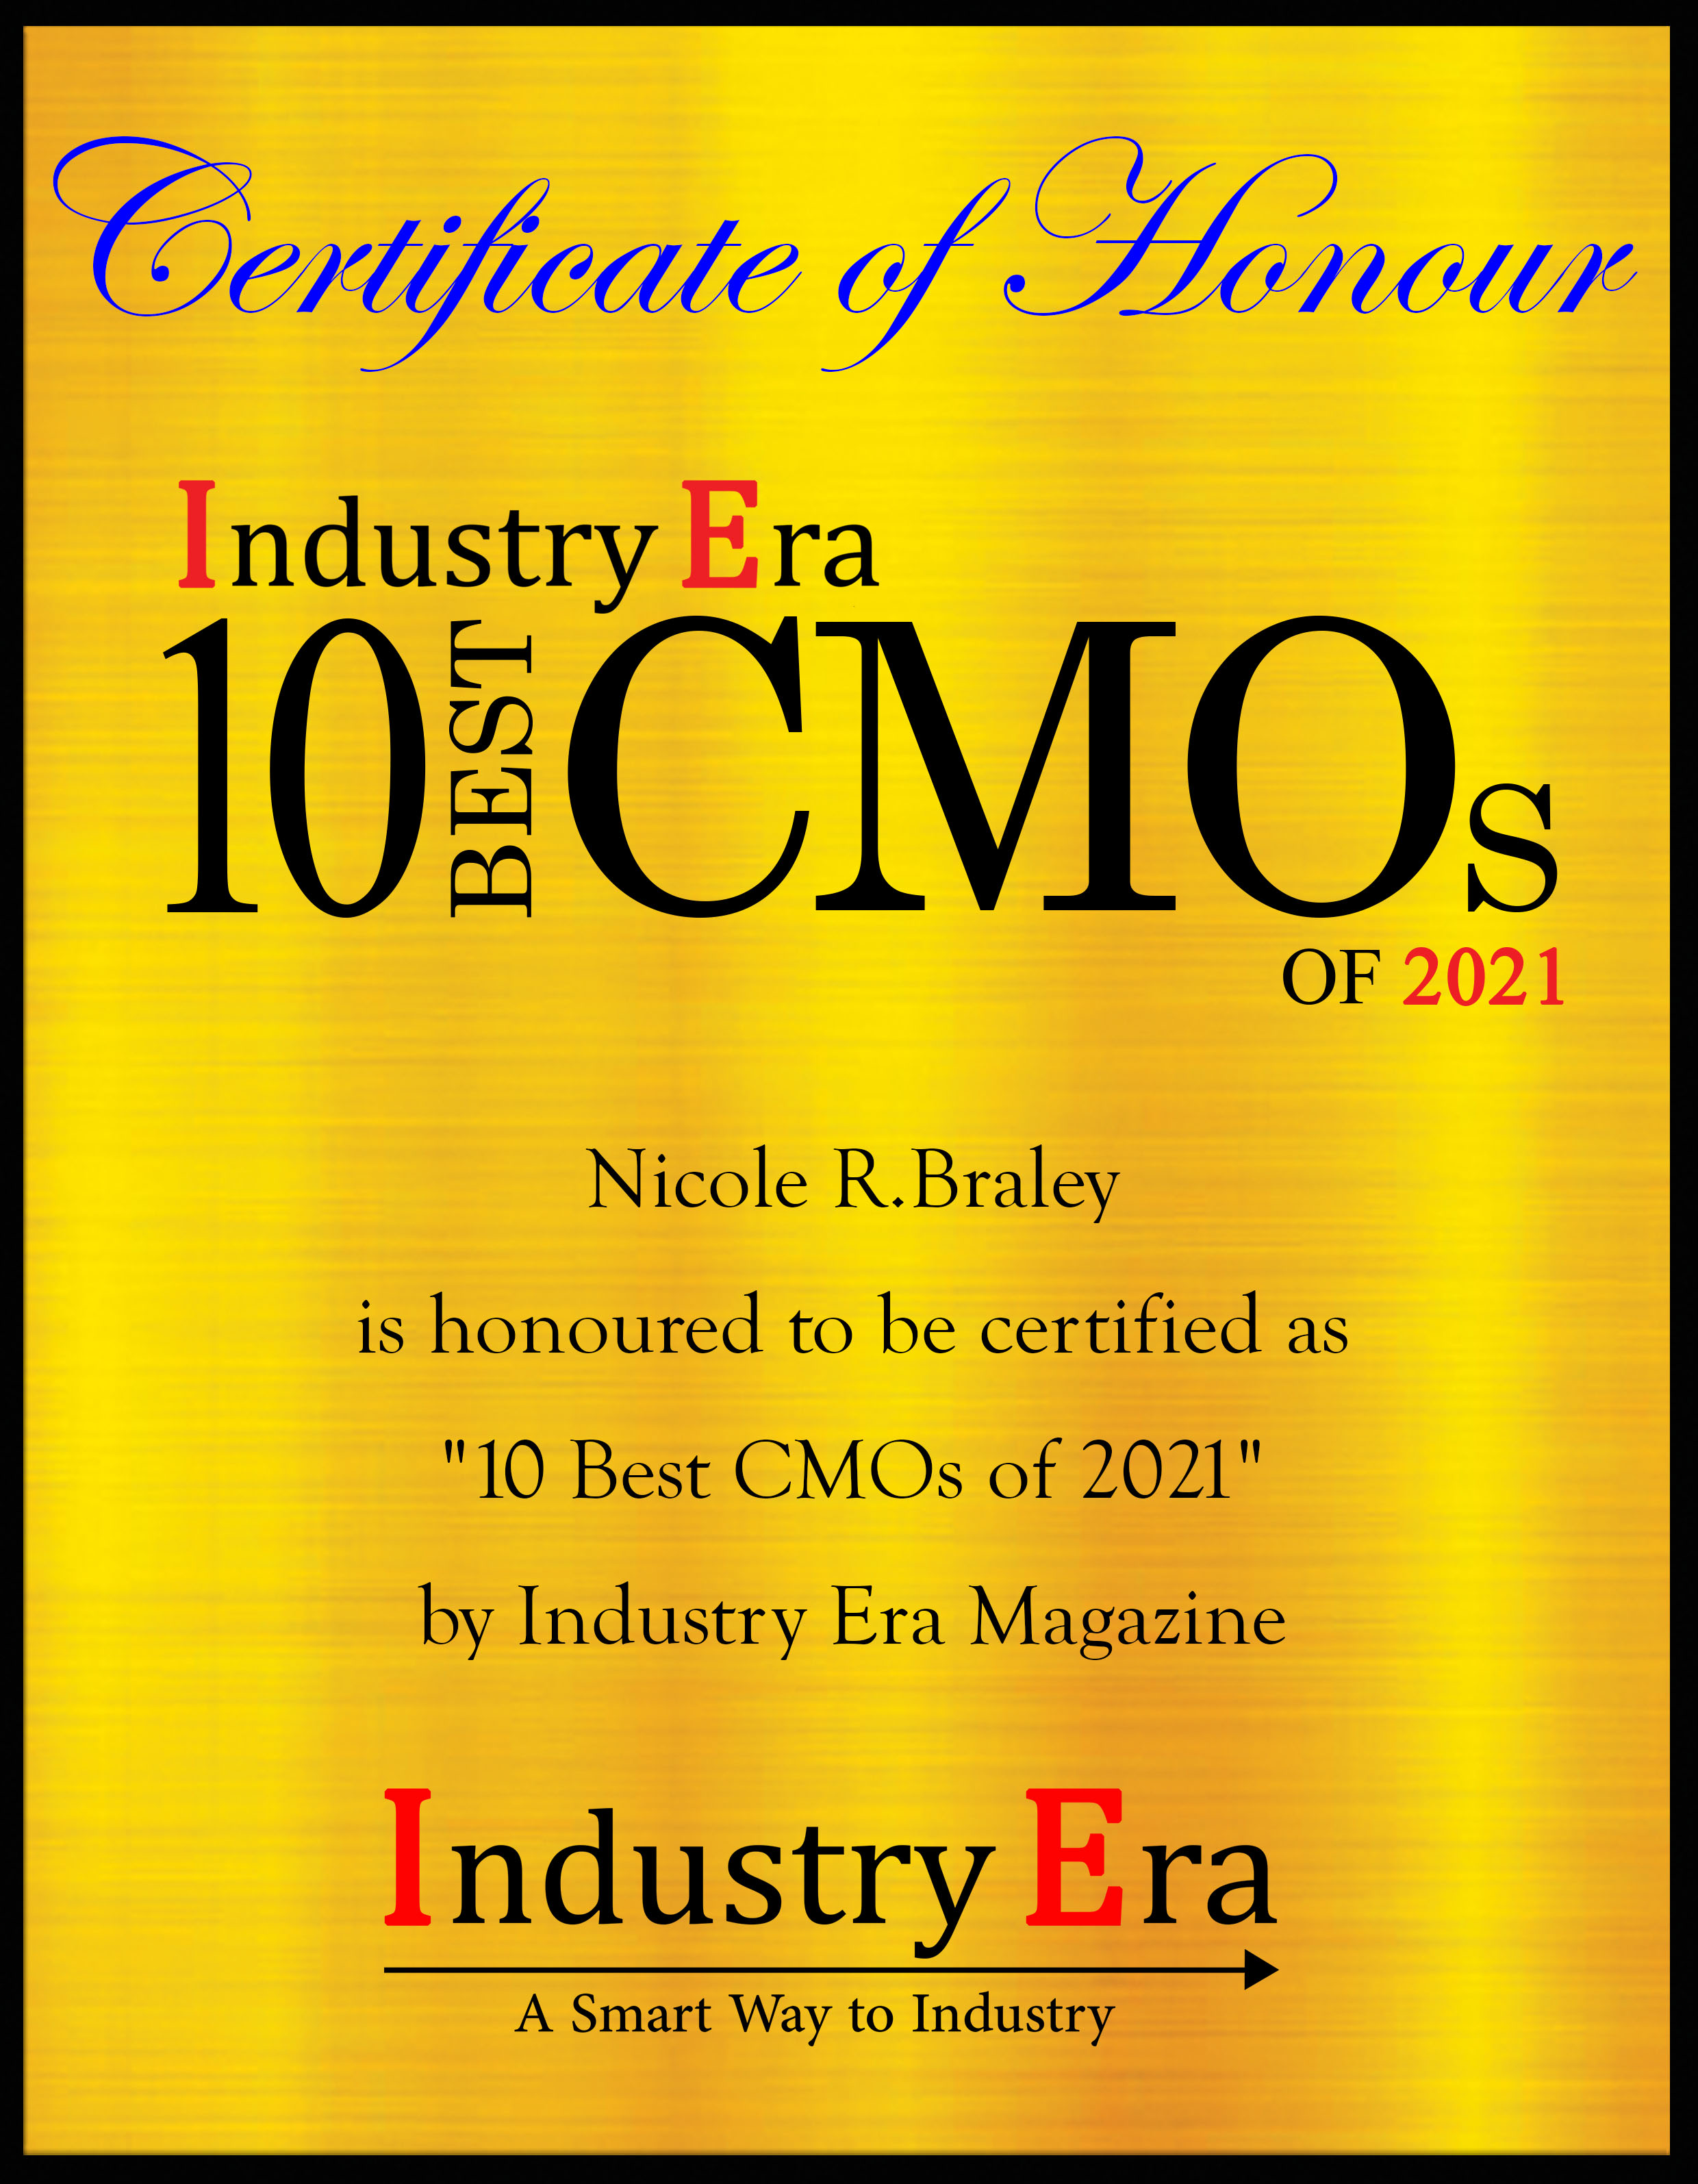 Nicole R.Braley CMO of Inception Fertility, Best CMOs of 2021